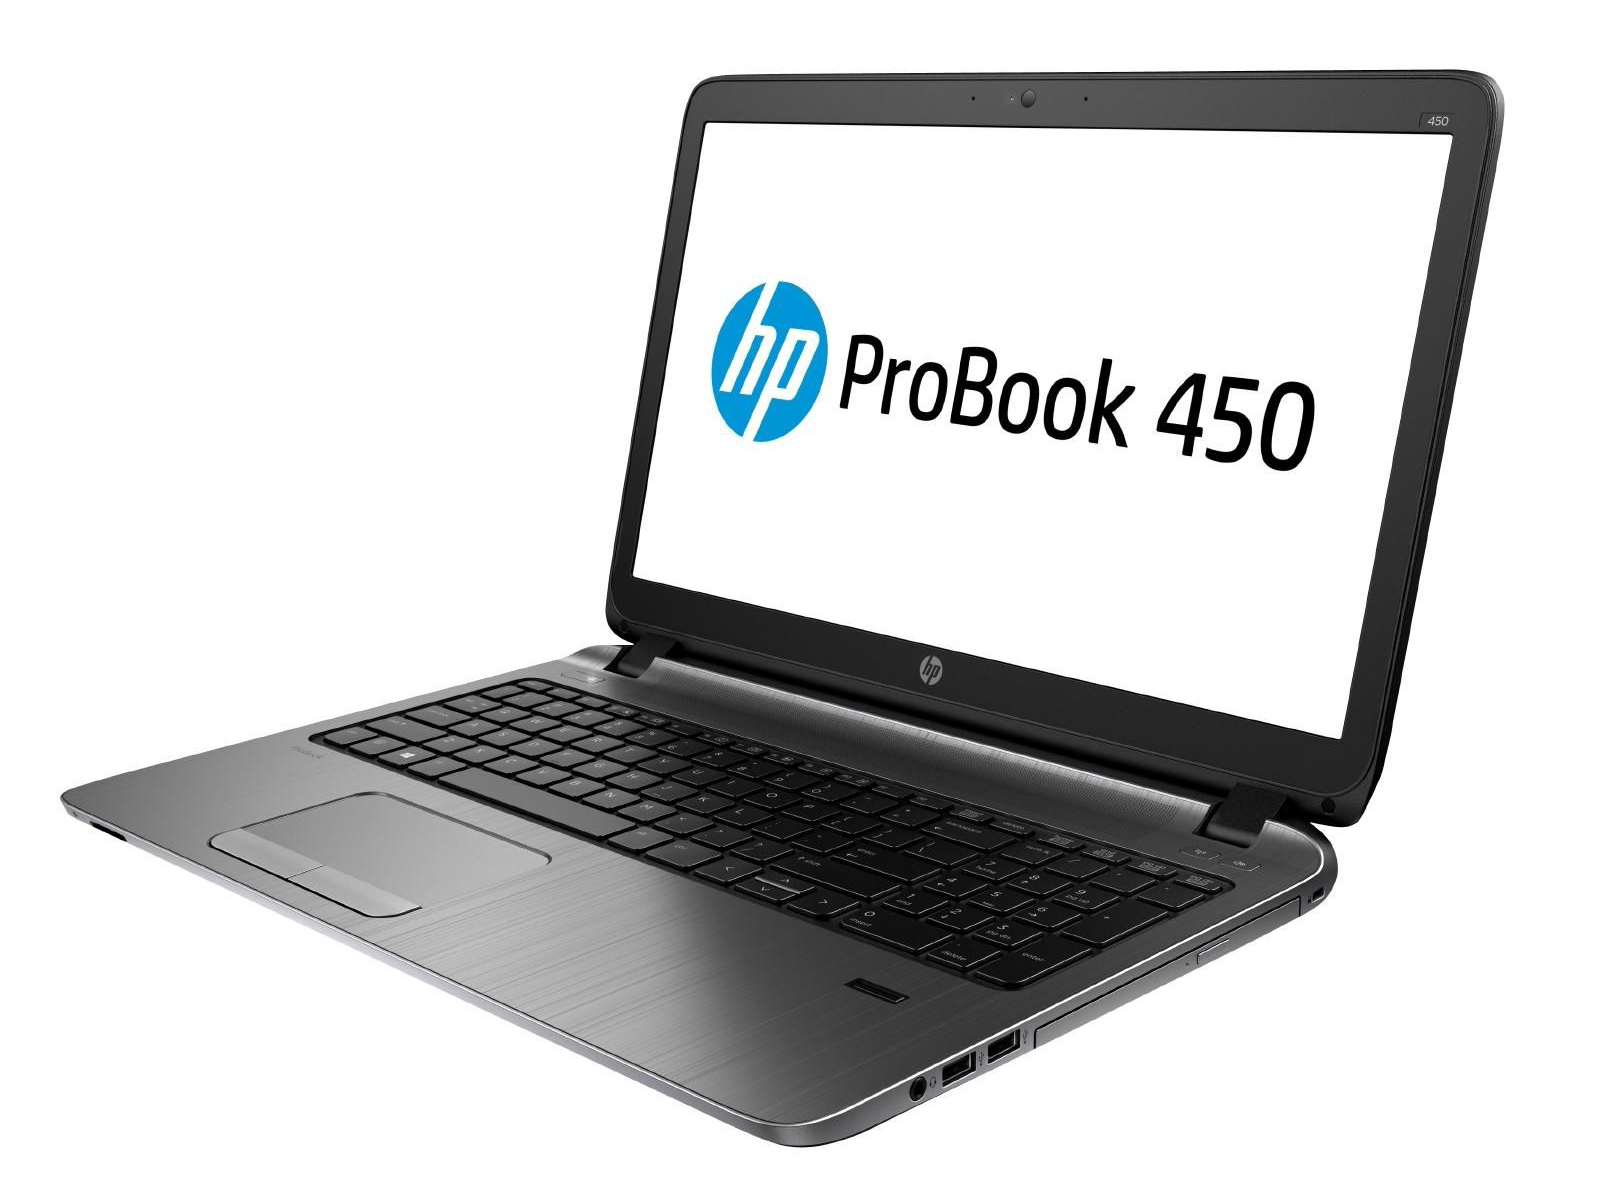 HP ProBook 450 G2 Intel Core i3, 8GB, 500GB, Windows 10